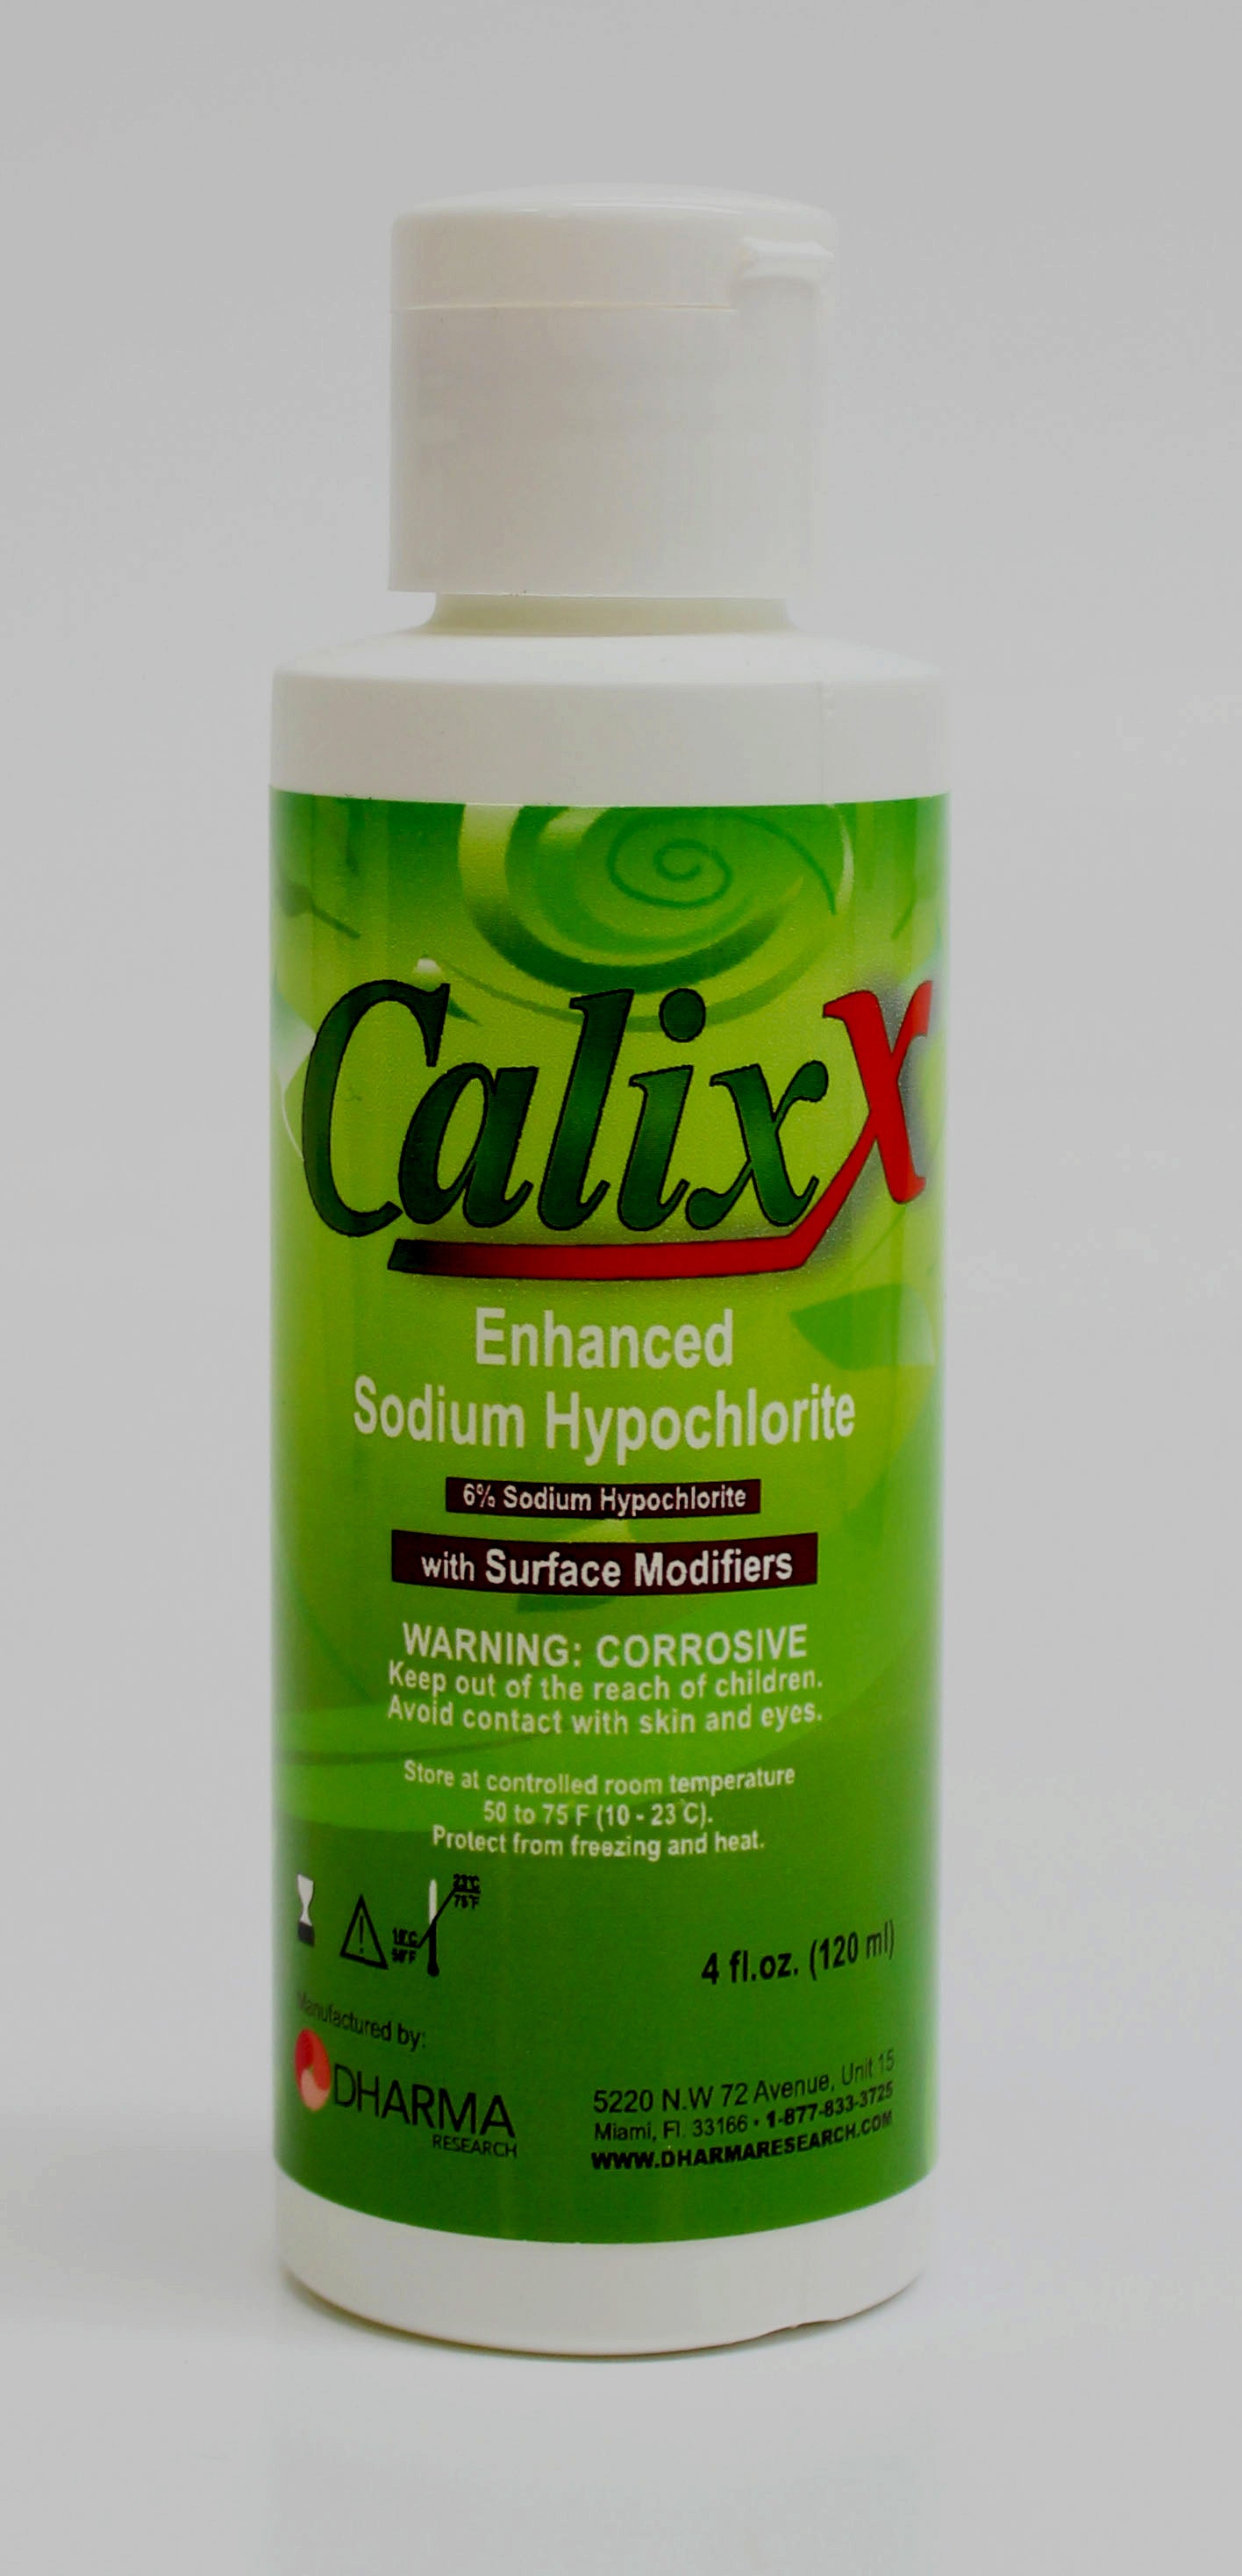 Calix-X 6% Enhanced Sodium Hypochlorite Solution